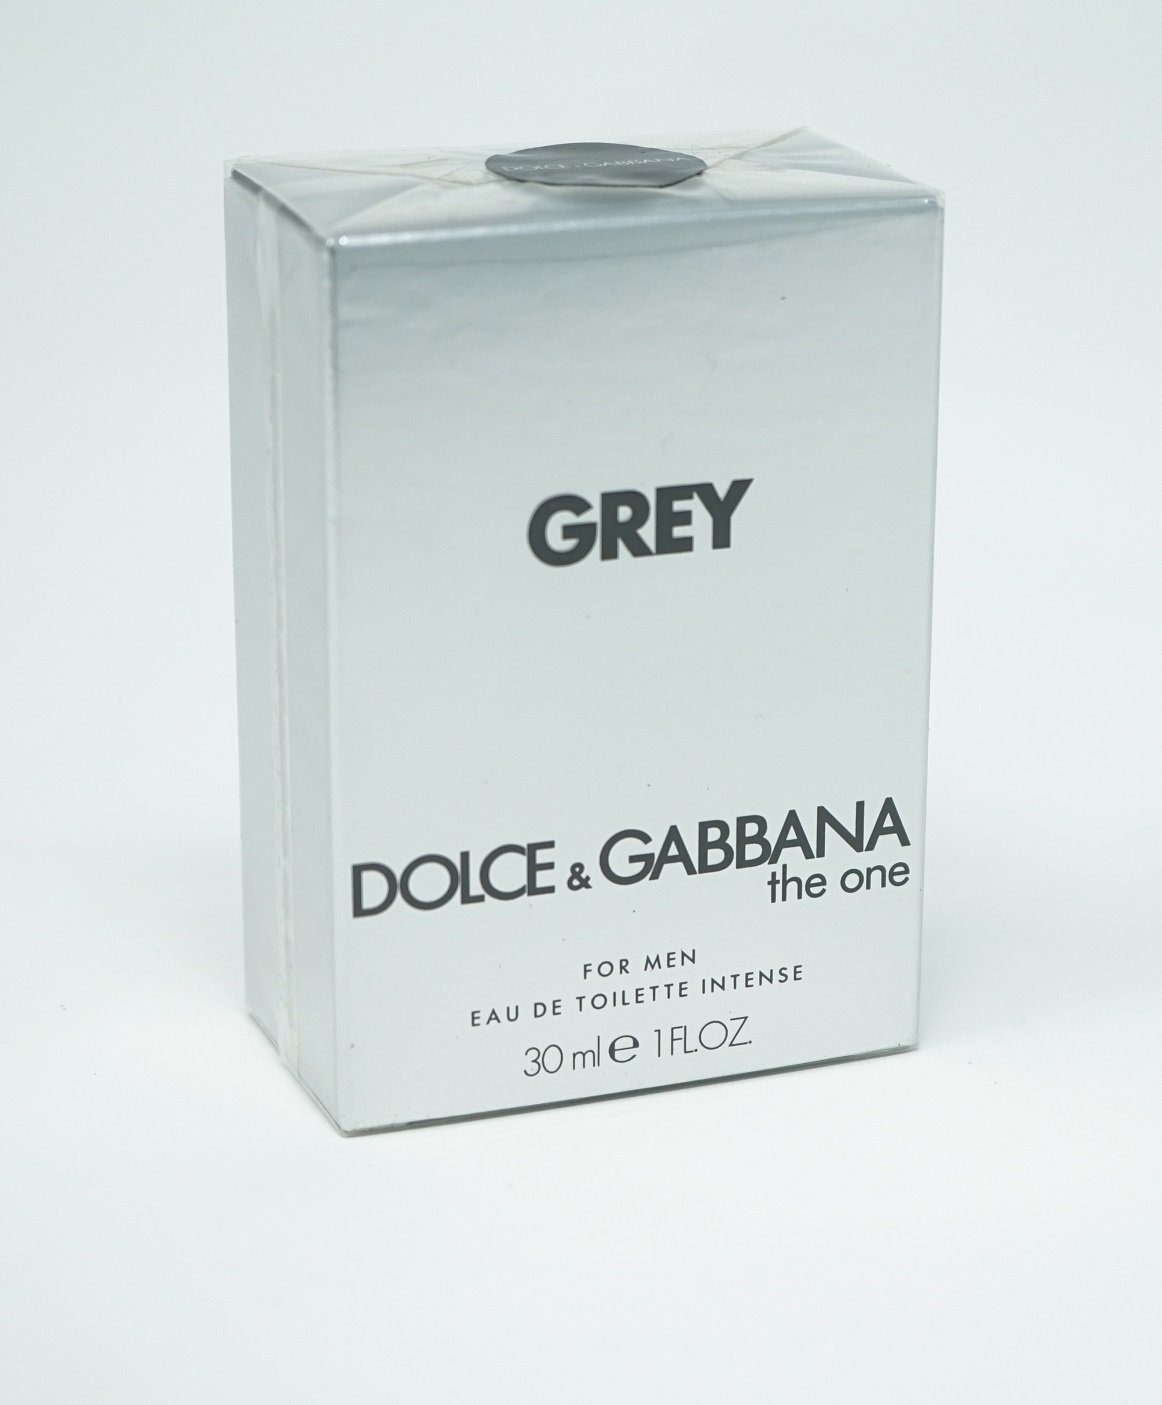 Intense de 30ml The Eau de One Gabbana & Eau Grey & DOLCE GABBANA Dolce Toilette Toilette